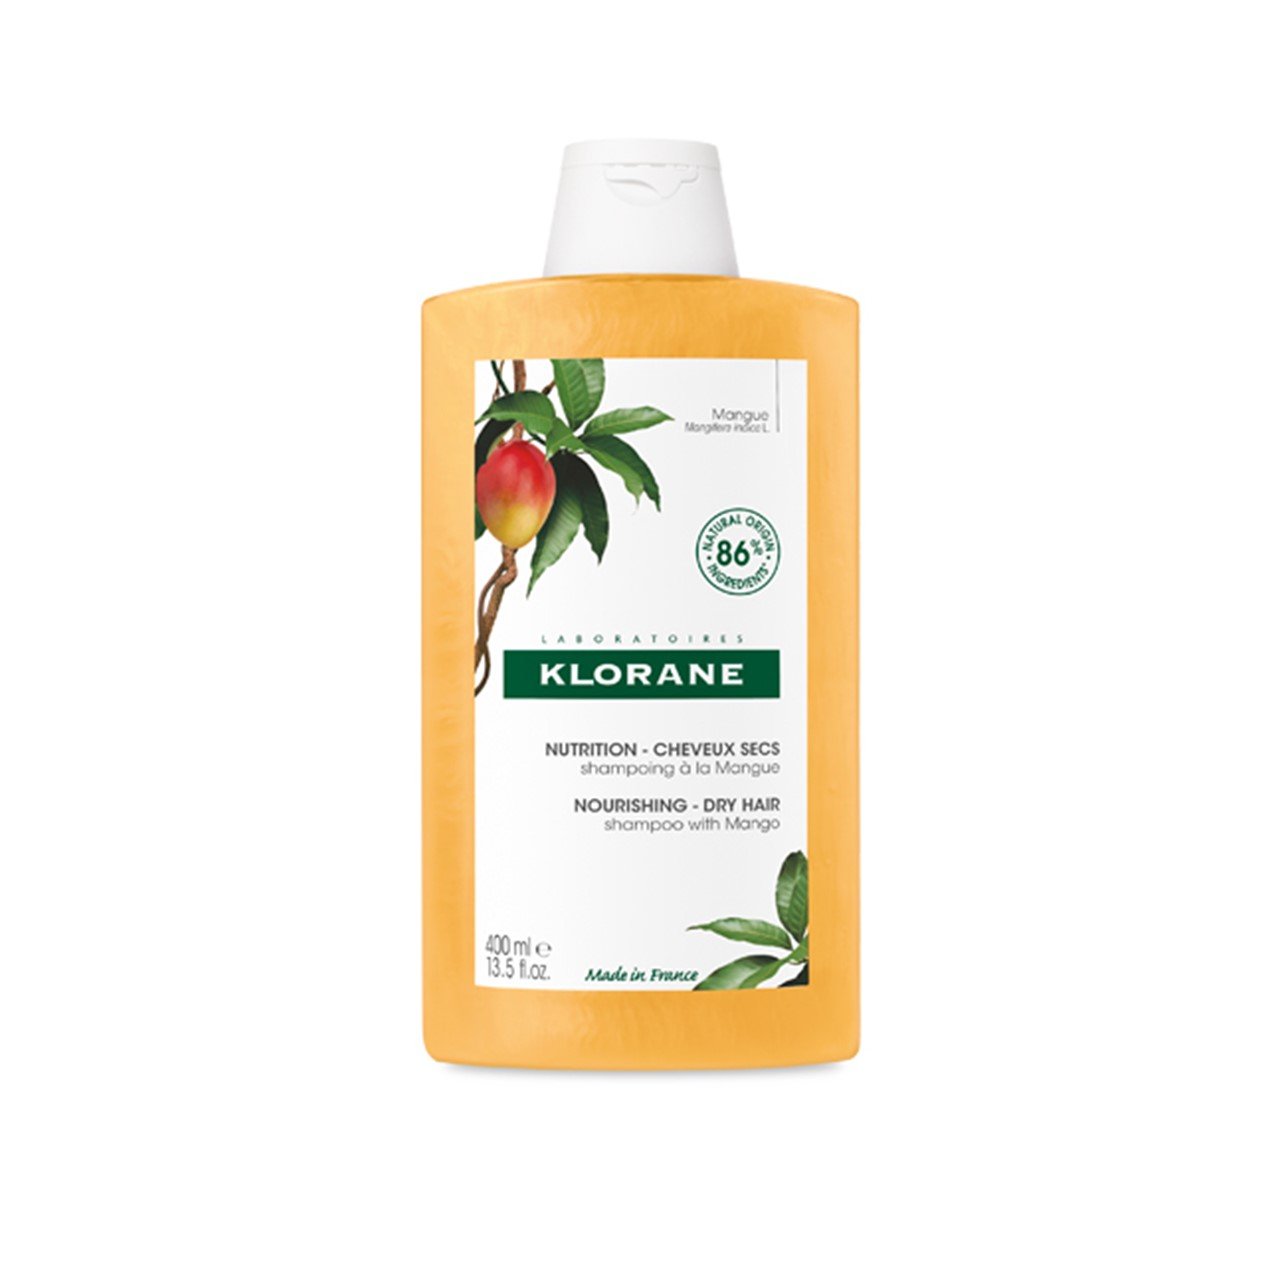 Klorane Shampoo with Mango Butter 13.5oz